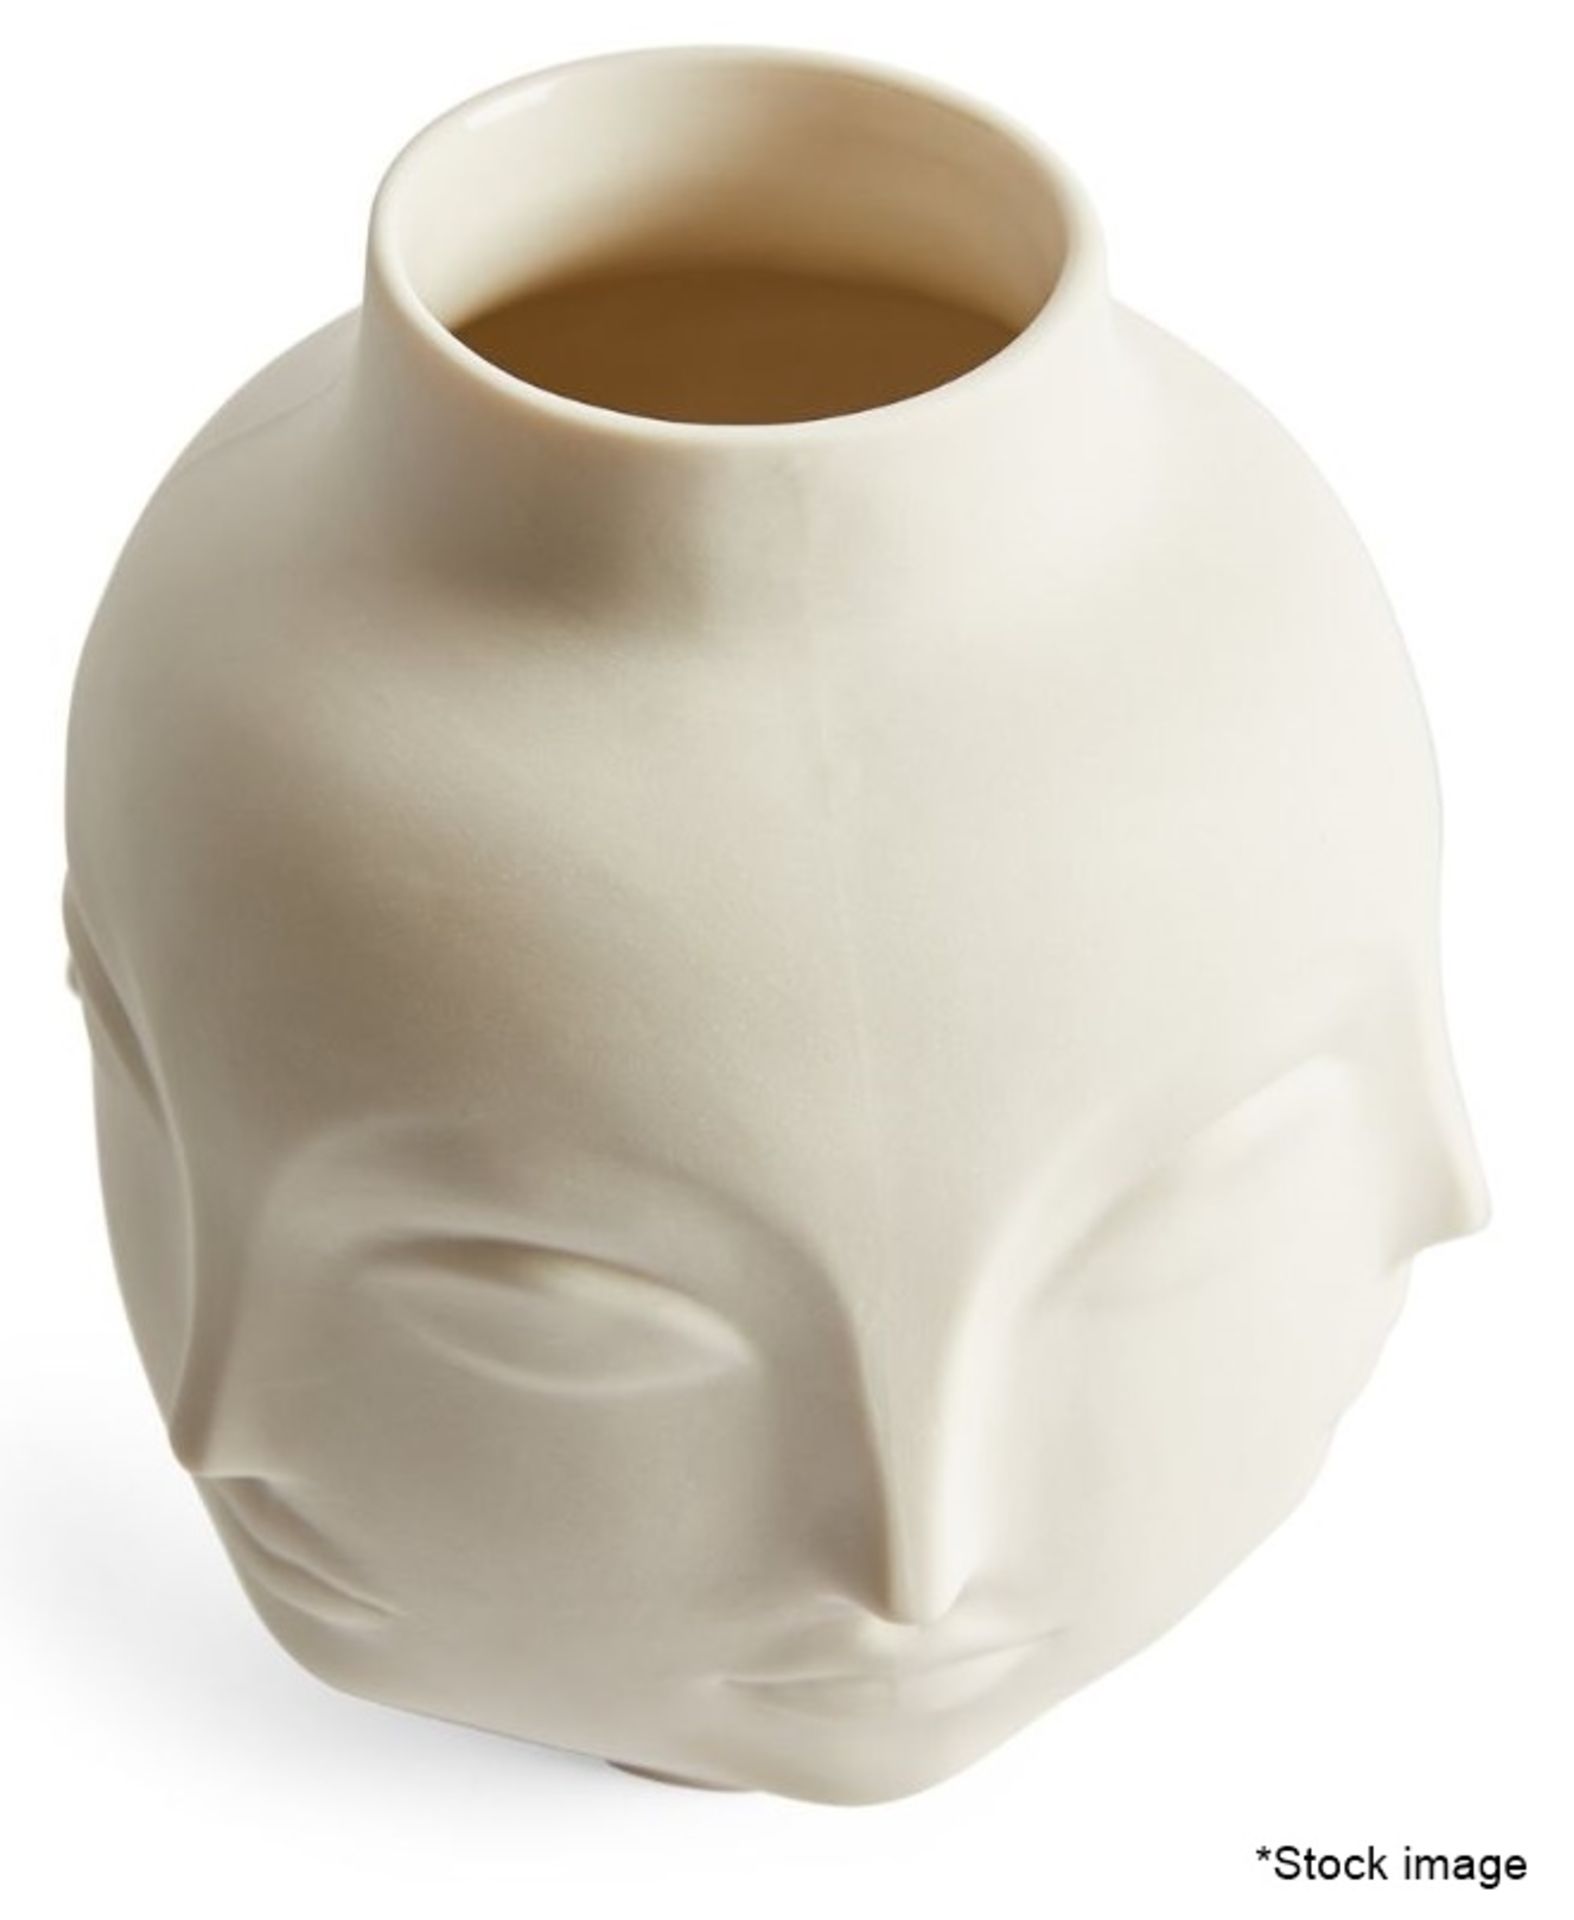 1 x JONATHAN ADLER 'Ja Muse - Dora Maar' Luxury Porcelain Vase - 23cm High - Original Price £295.00 - Image 3 of 13